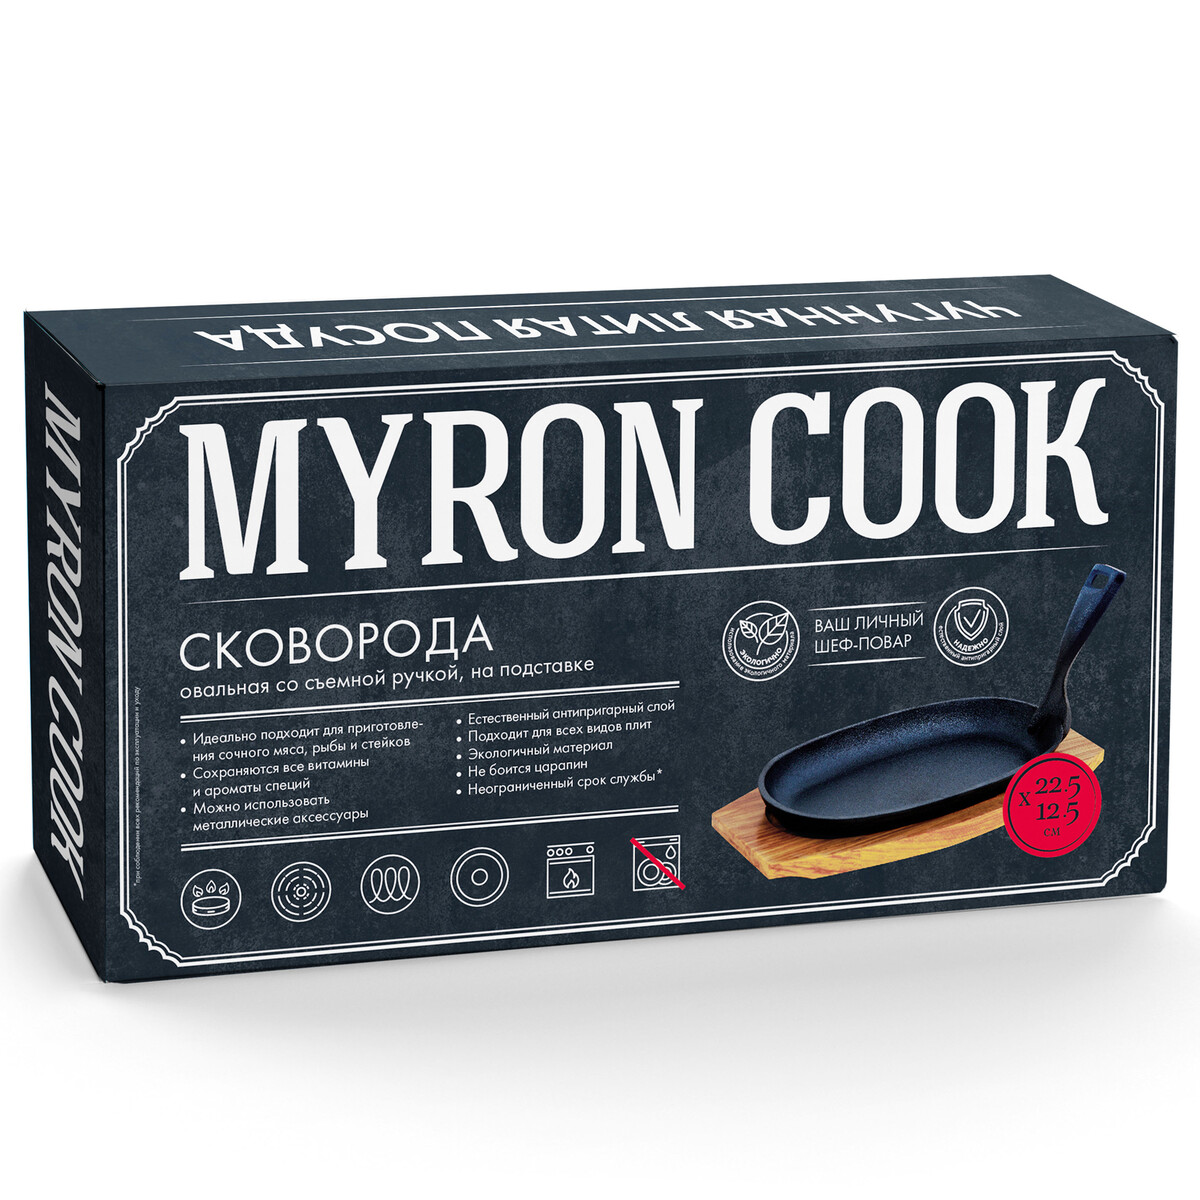 Сковорода MYRON COOK 01518360 - фото 3